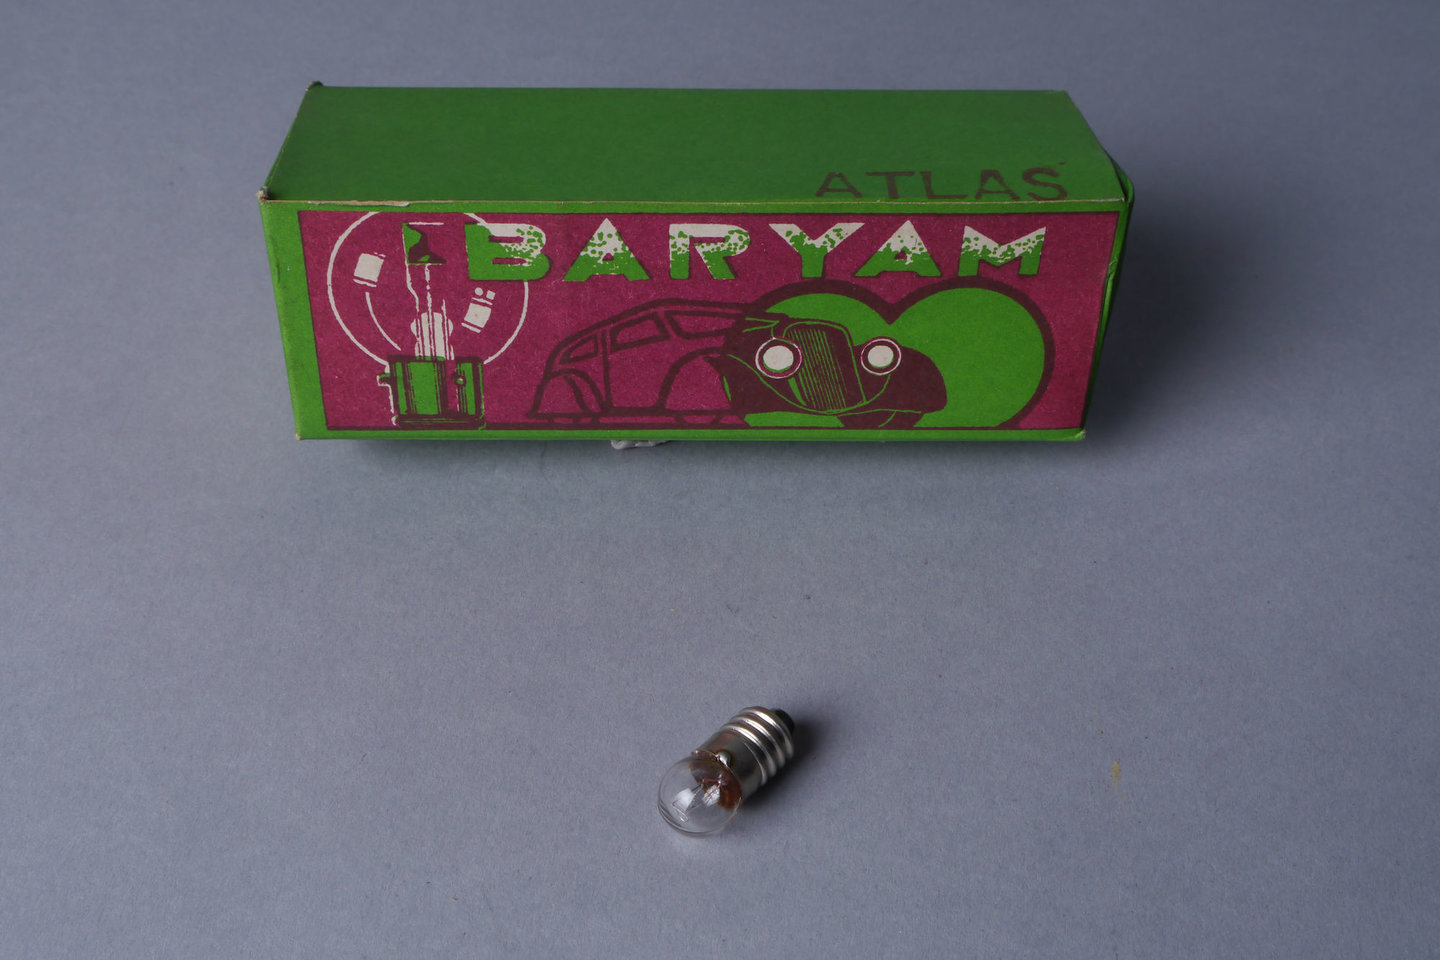 Autolampjes van het merk Baryam